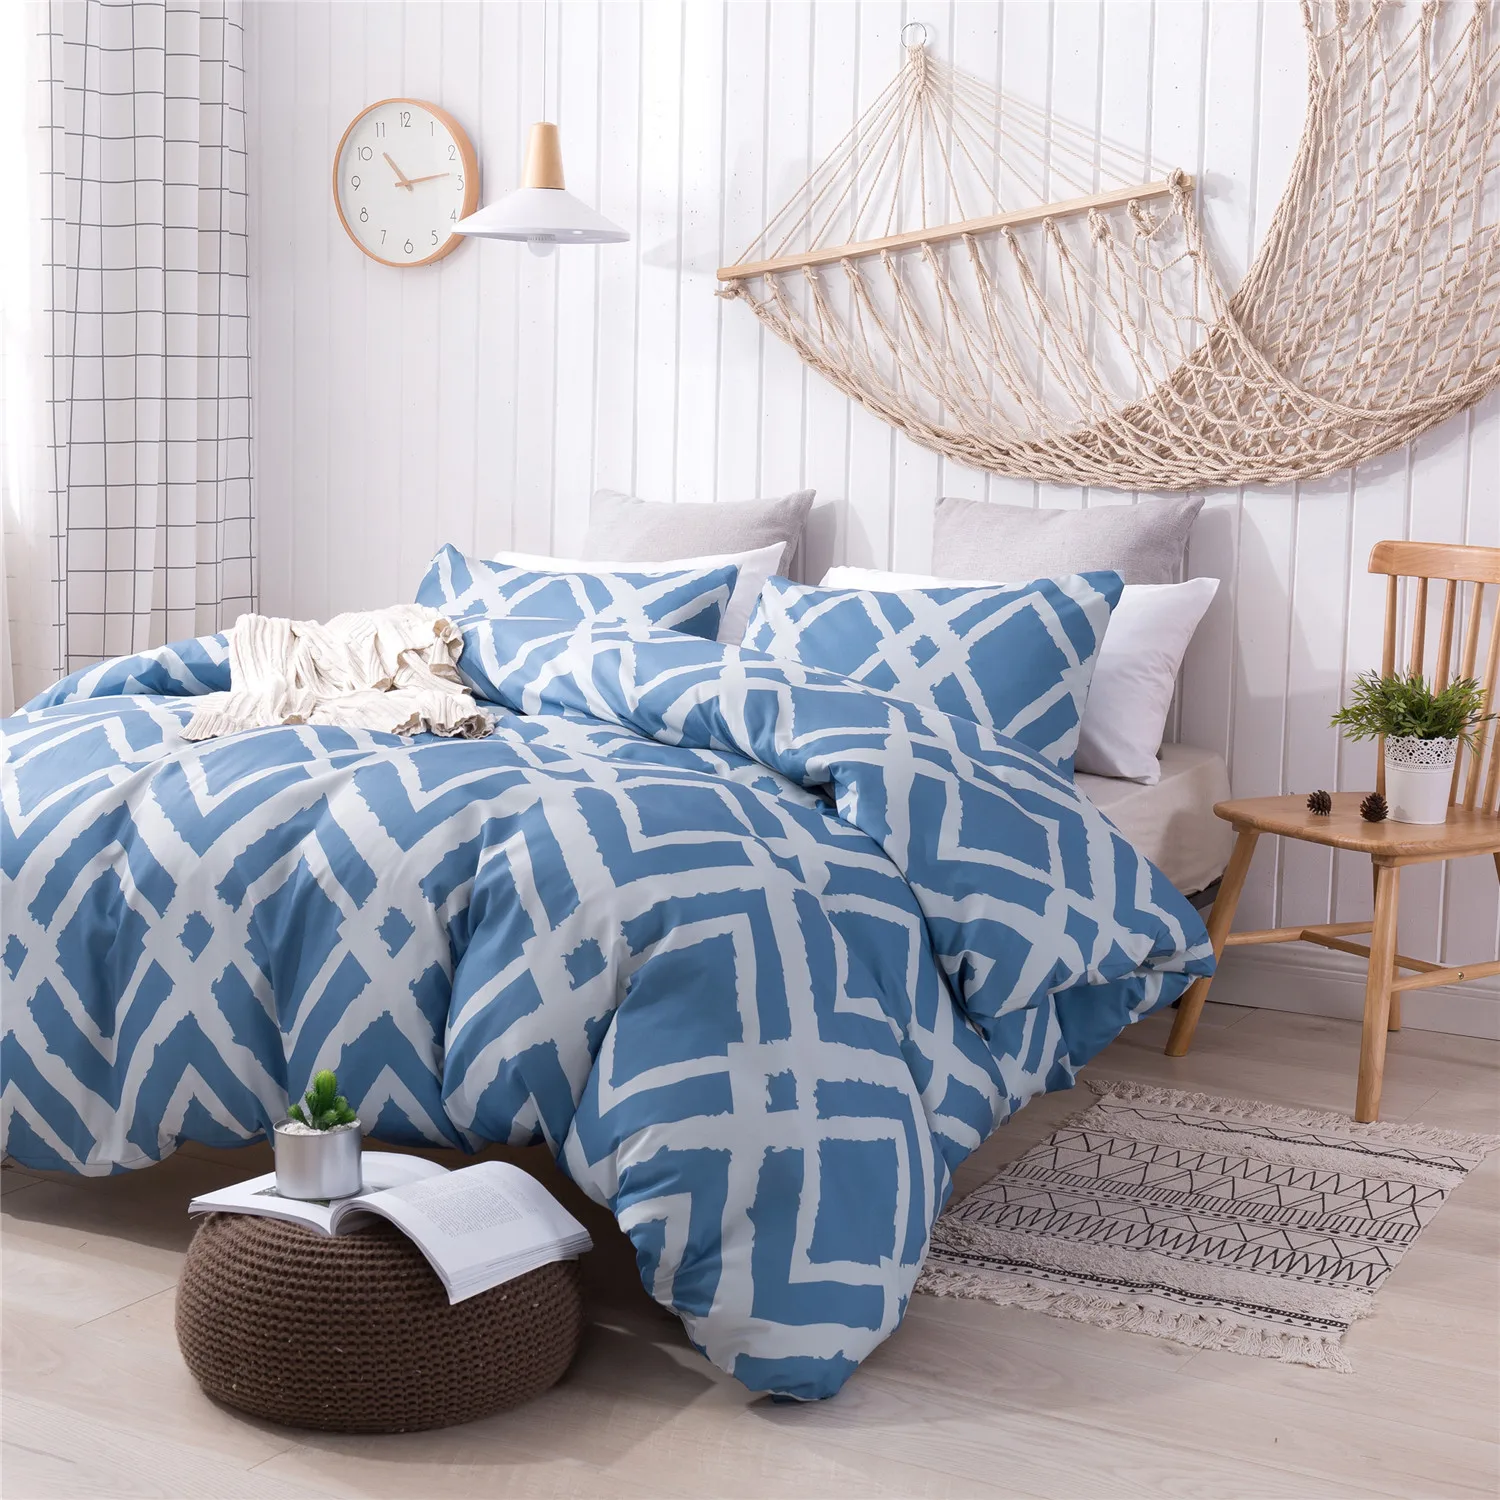 

Nordic Linens Duvet Cover Bed Linen Bedclothes Comforter Cover 2 Bedrooms Euro Bed Linen 3pcs King Queen Twin Size Bedding Set